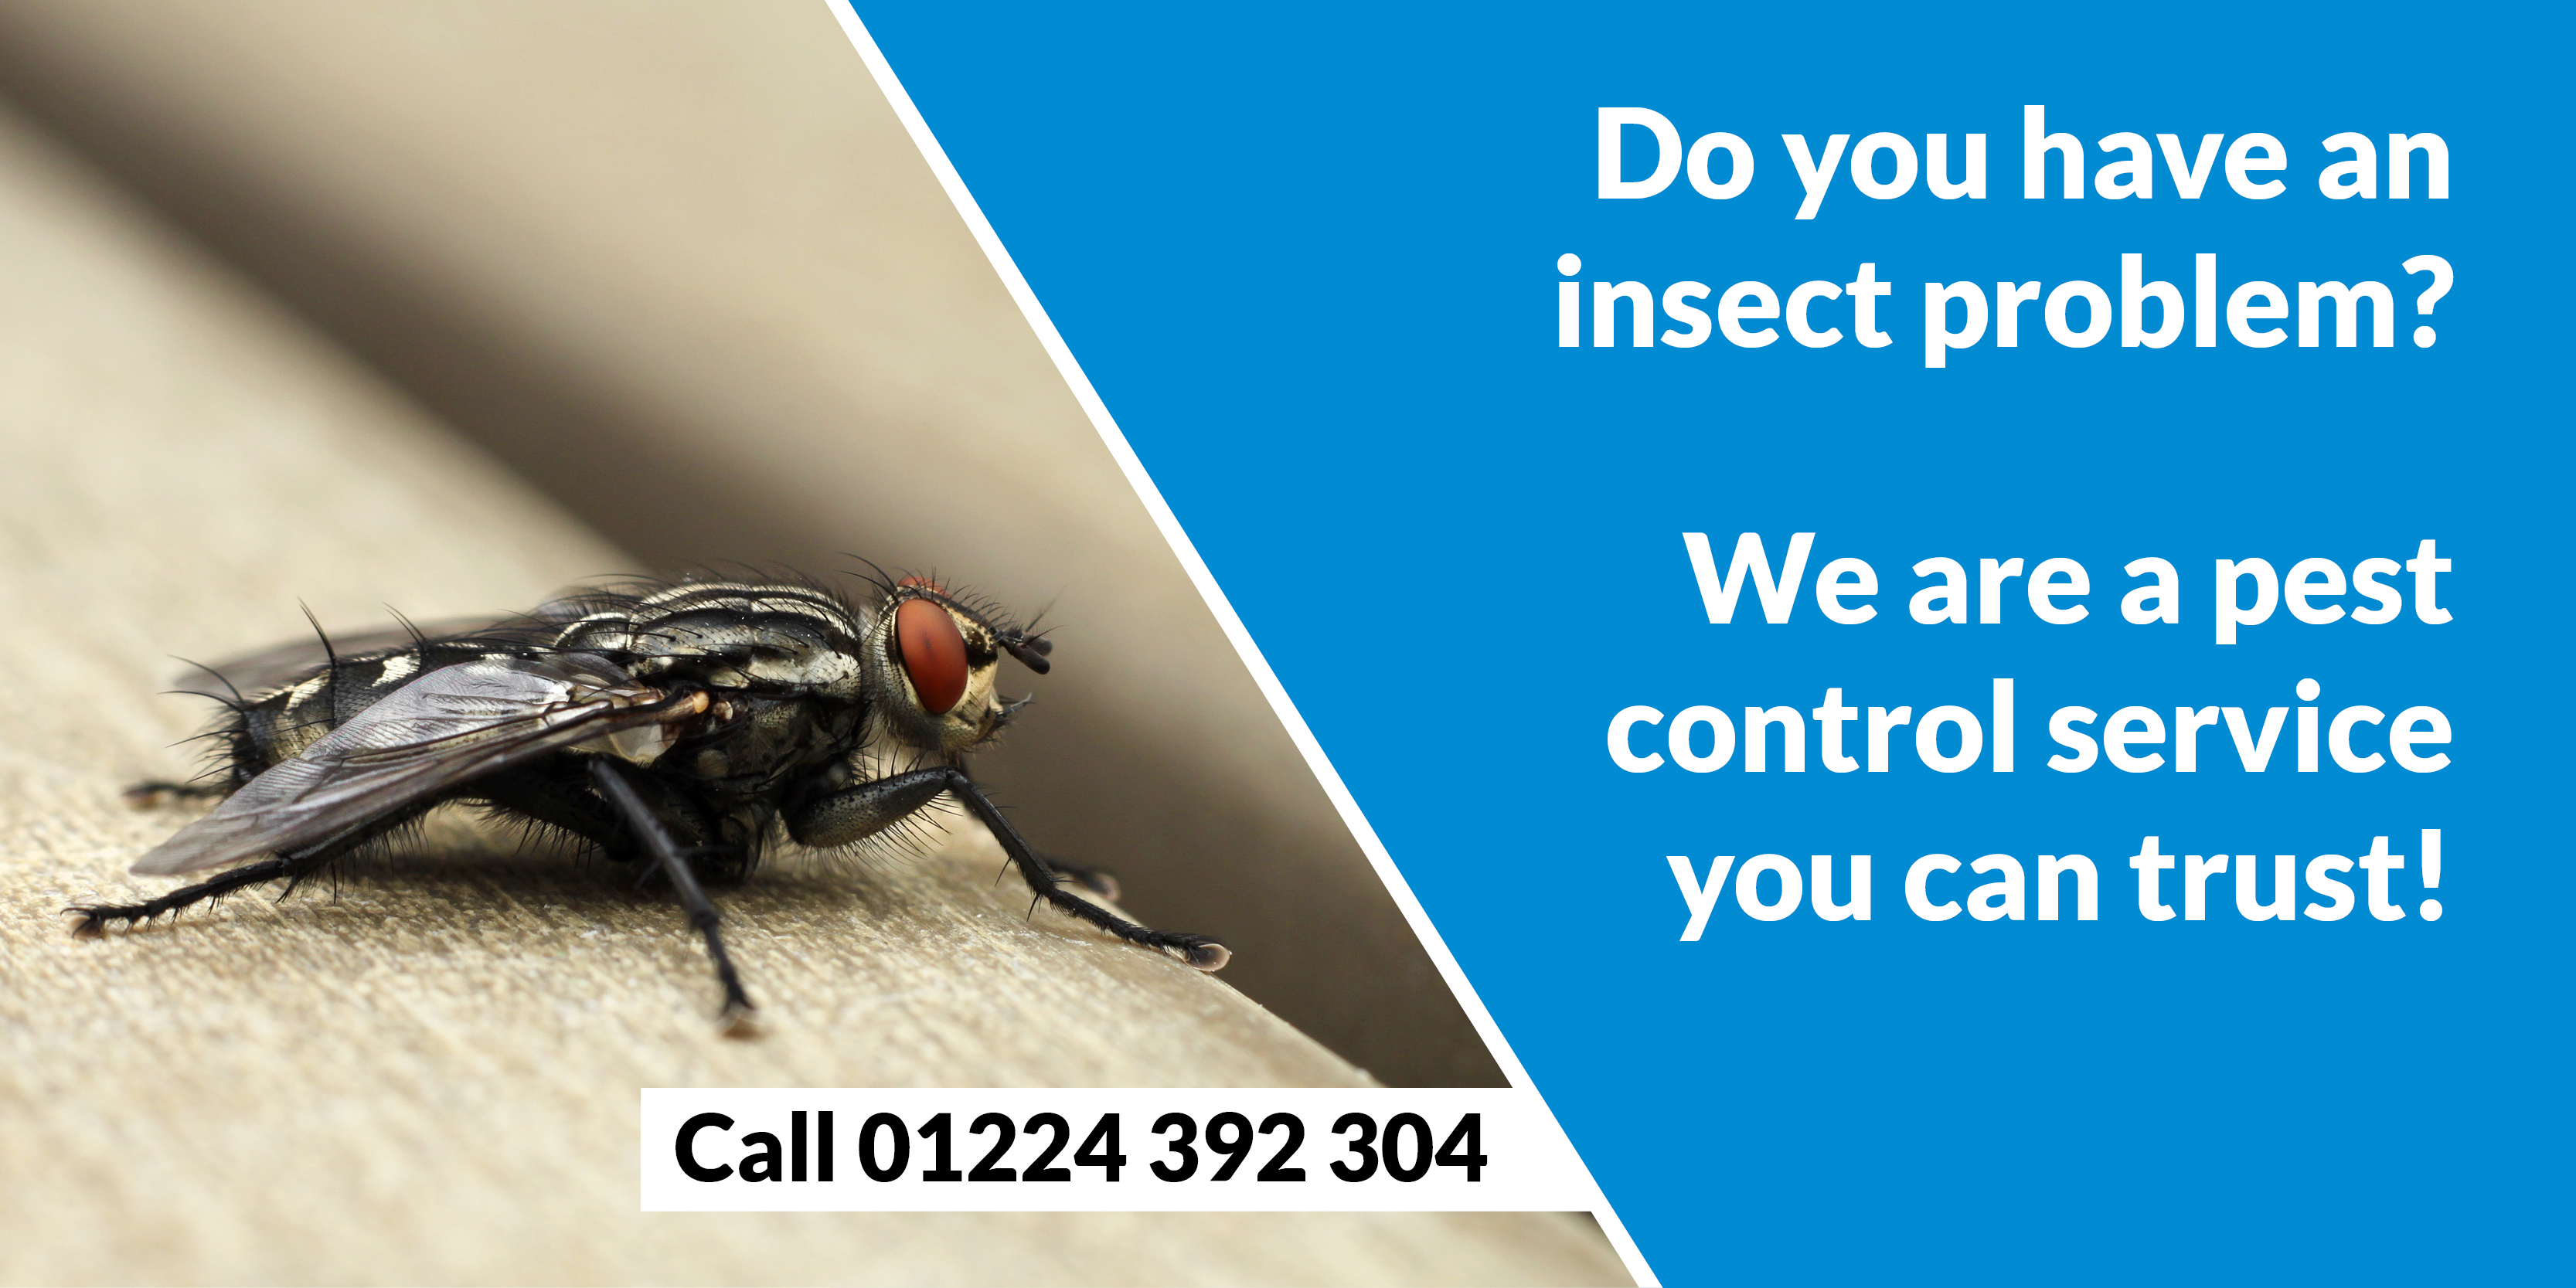 Pest Control Professionals Aberdeen Pest Solutions - Pest Solutions